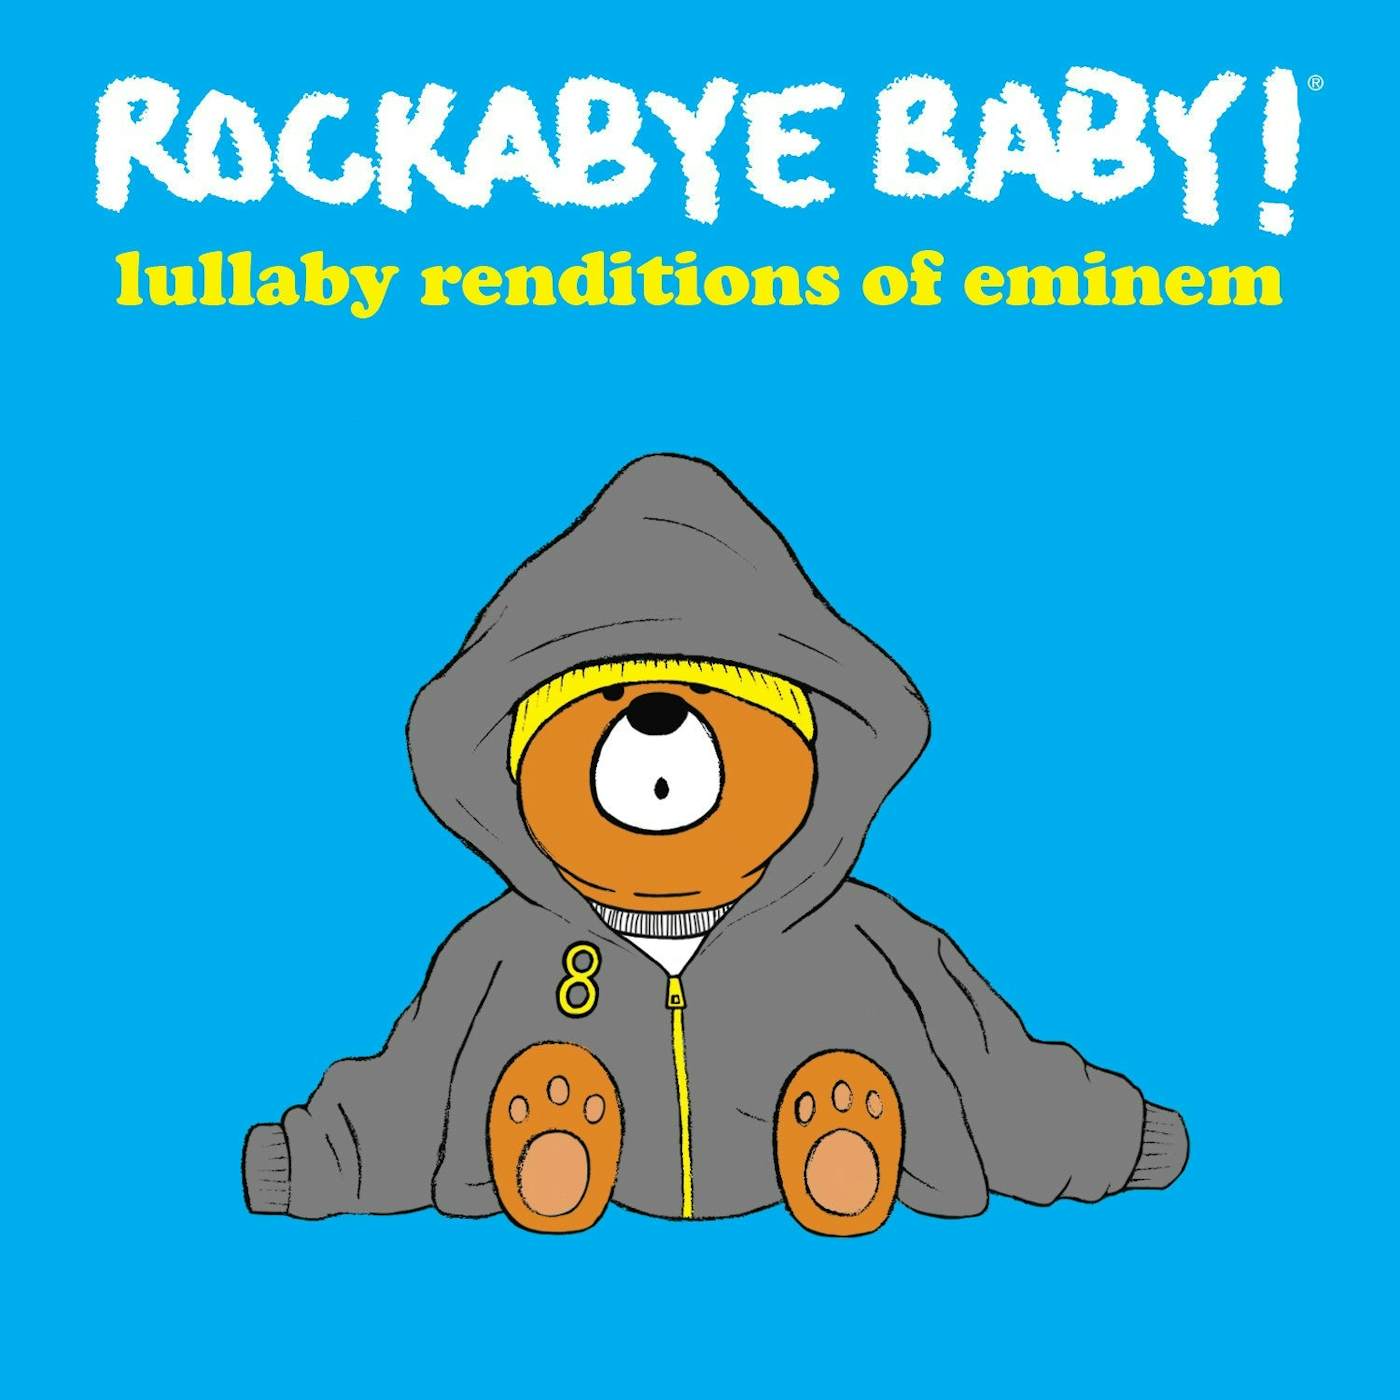 Rockabye Baby! Lullaby Renditions of Eminem - Vinyl